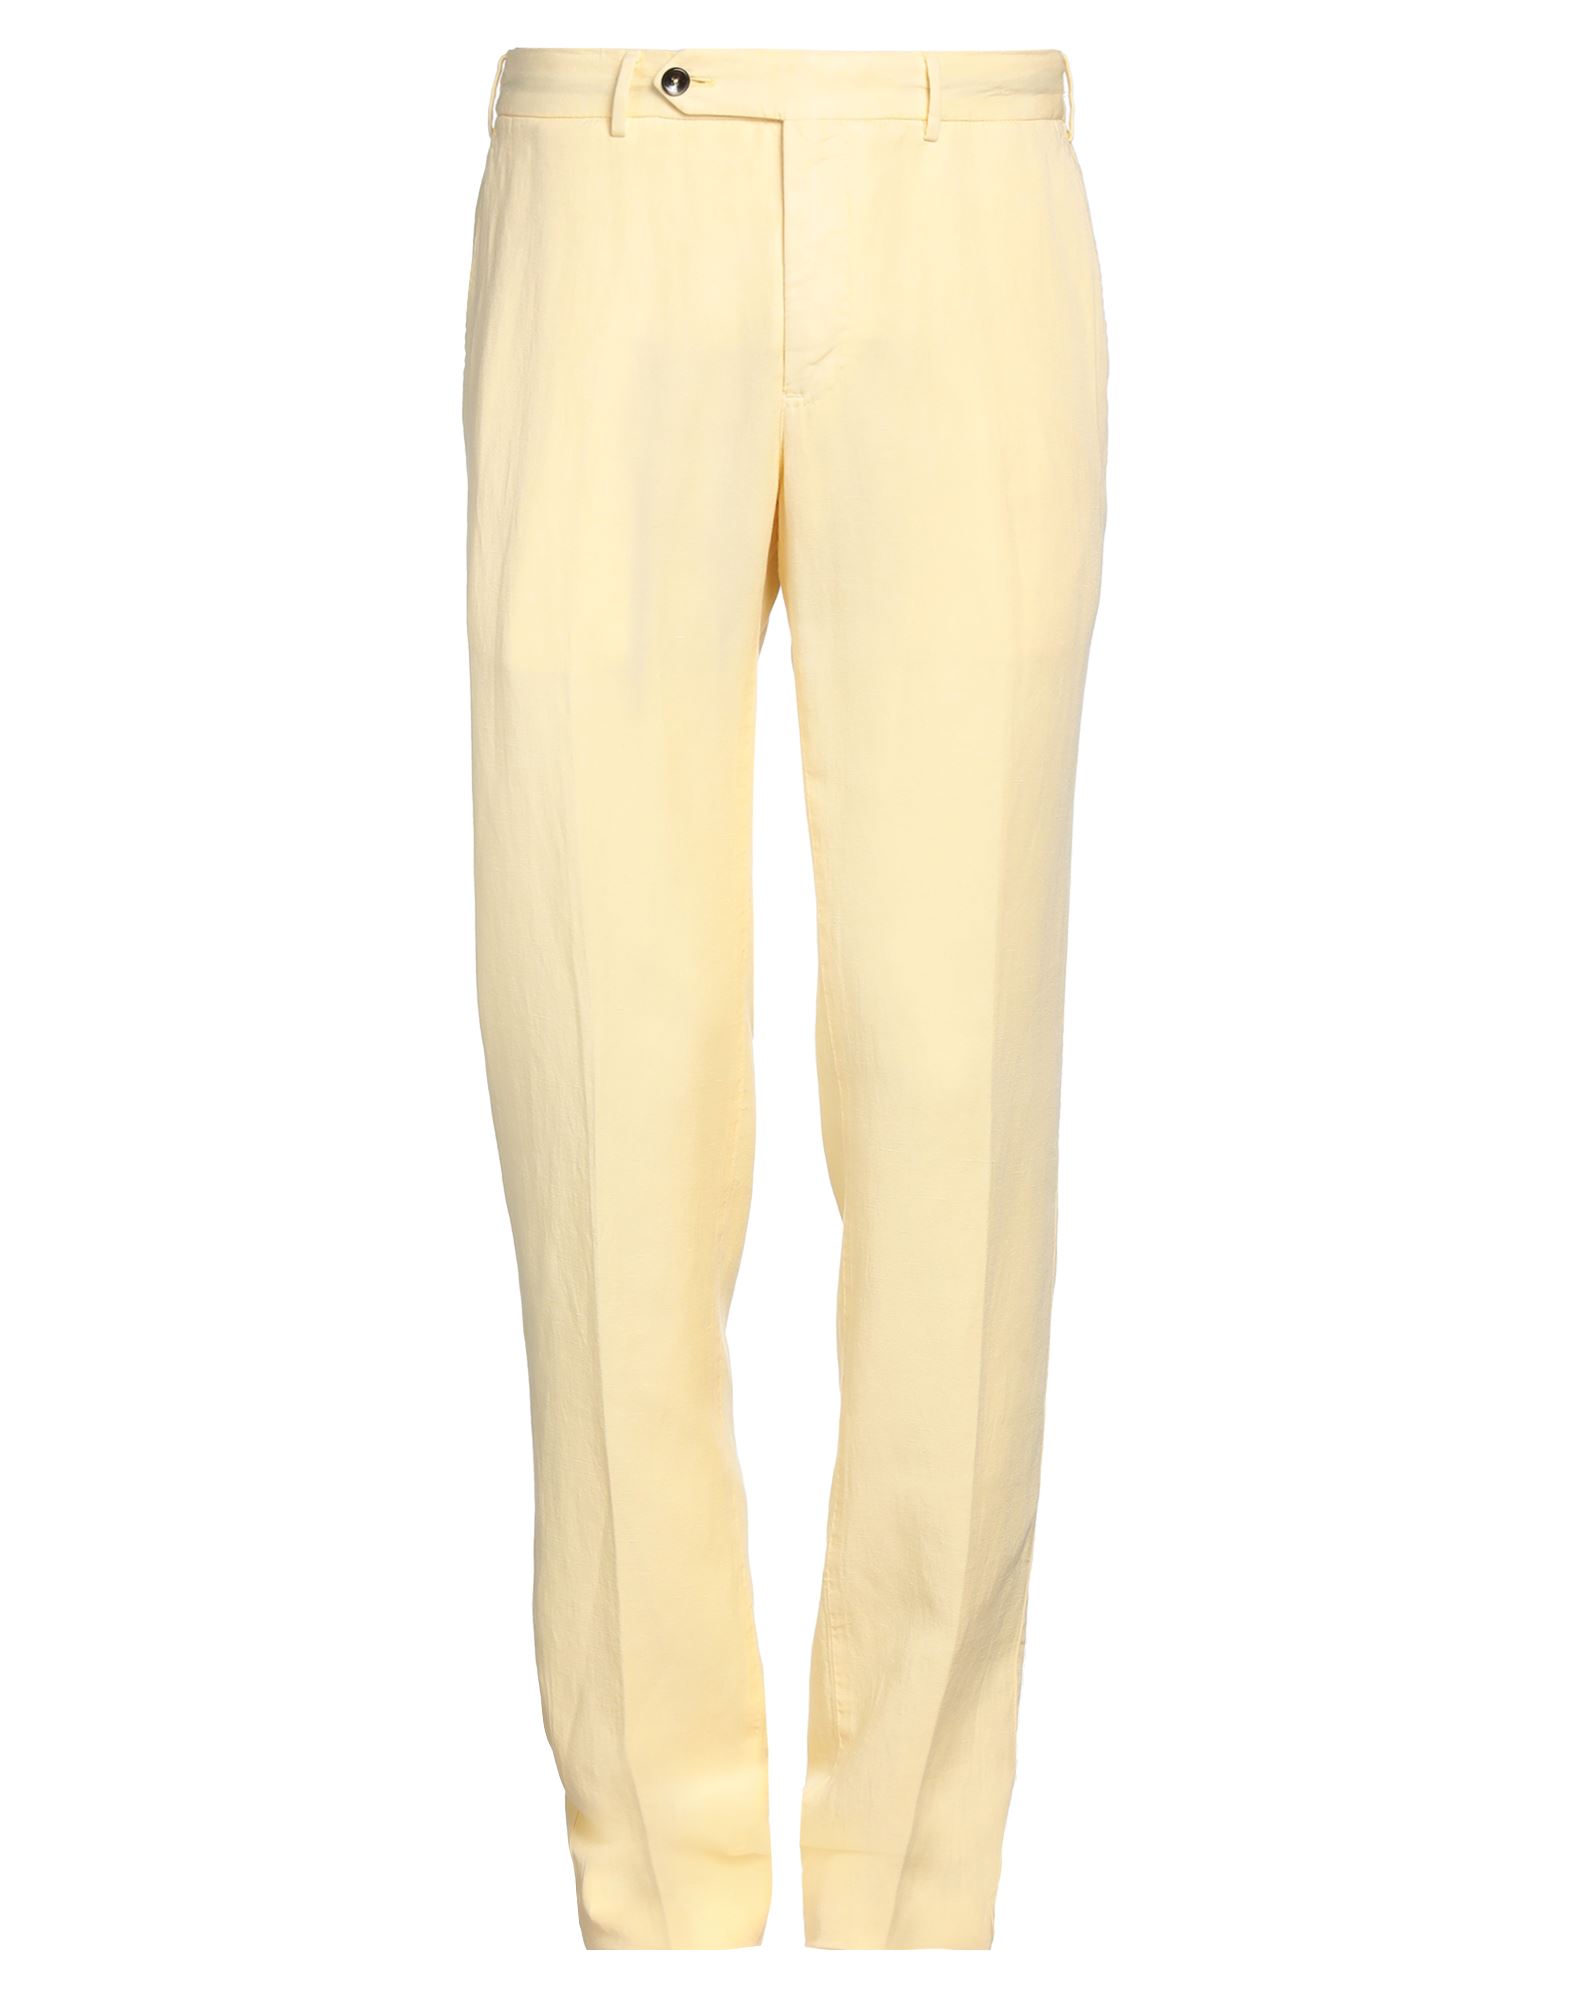 Pt Torino Man Pants Light Yellow Size 32 Lyocell, Linen, Cotton